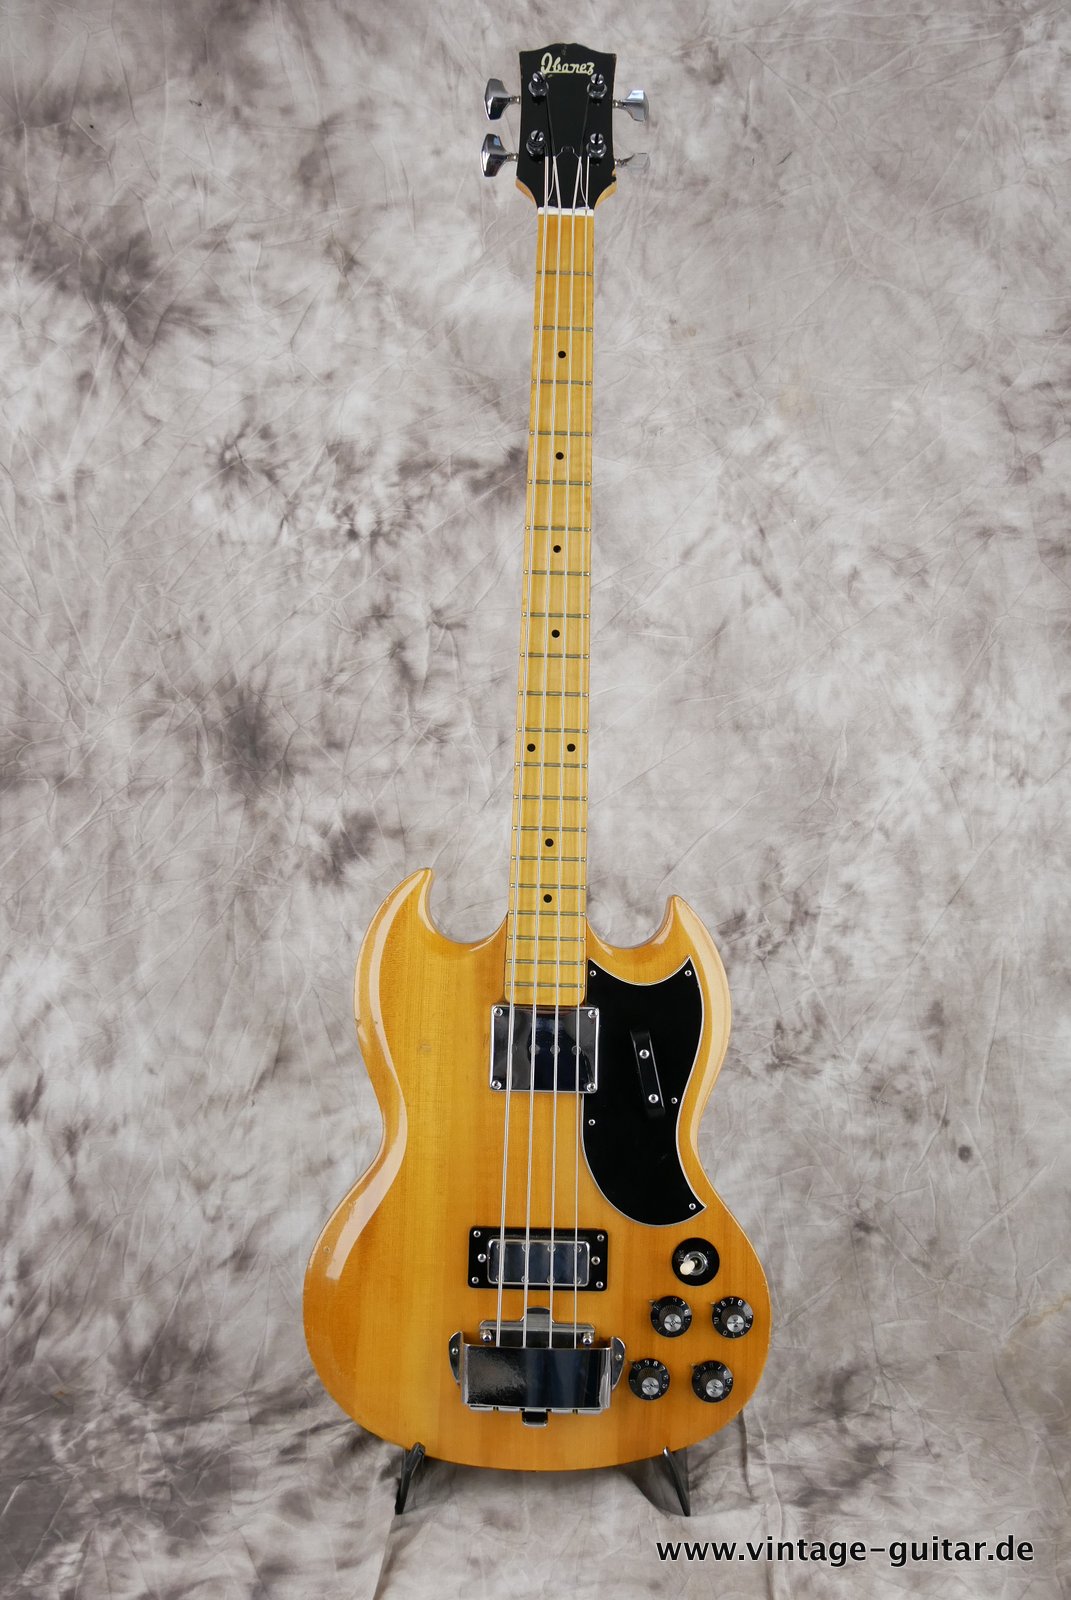 Ibanez-Model-2452-Bass-1975-001.JPG